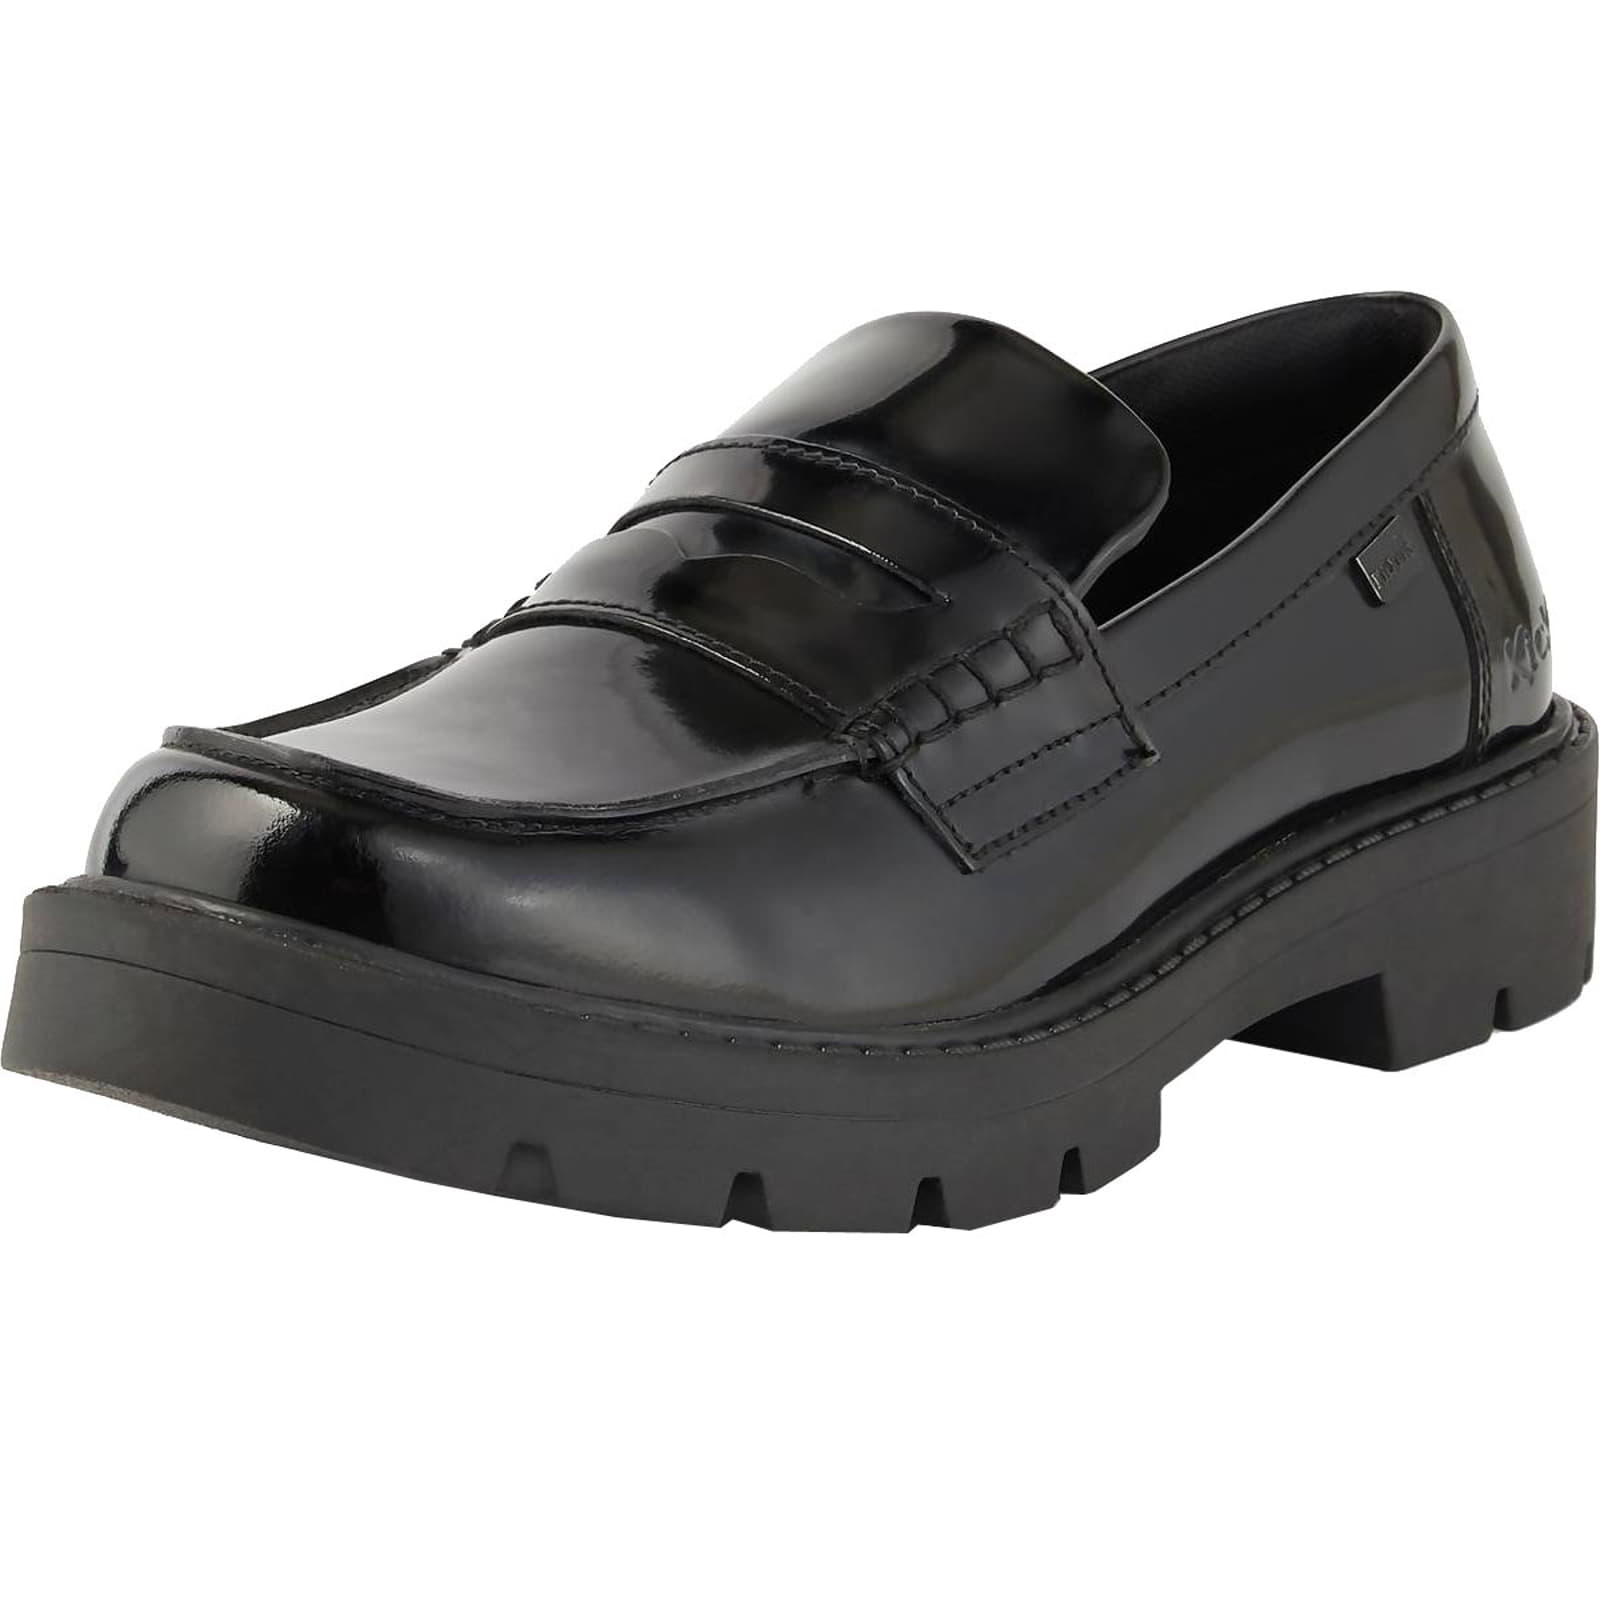 Kickers Women's Kori Loafer Leather Shoes  - UK 5 / EU 38